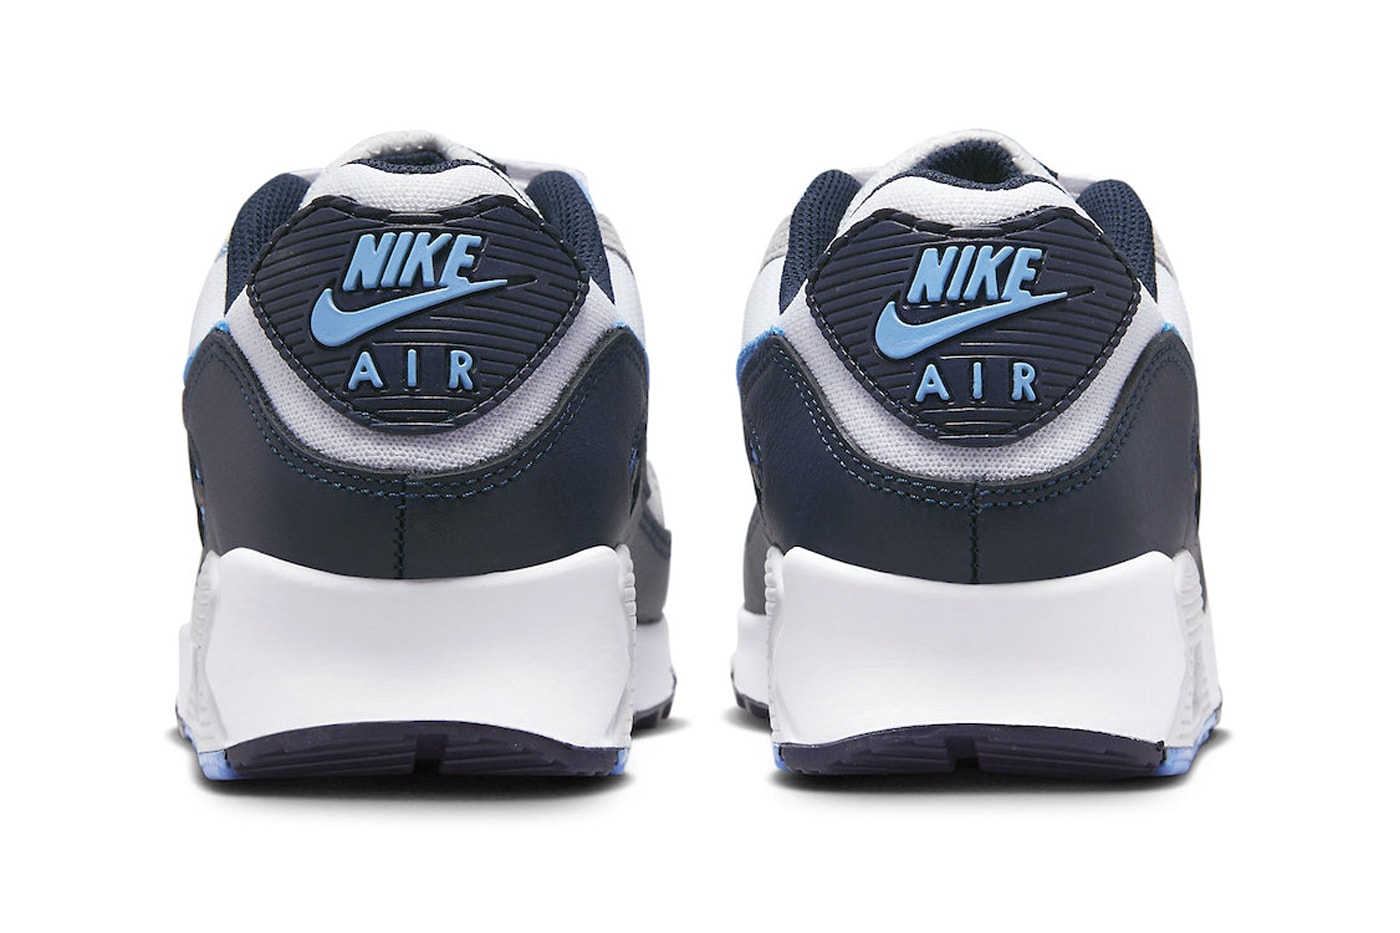 Nike Air Max 90 UNC spring 2023 white university blue dark obsidian 130 USD release info date price